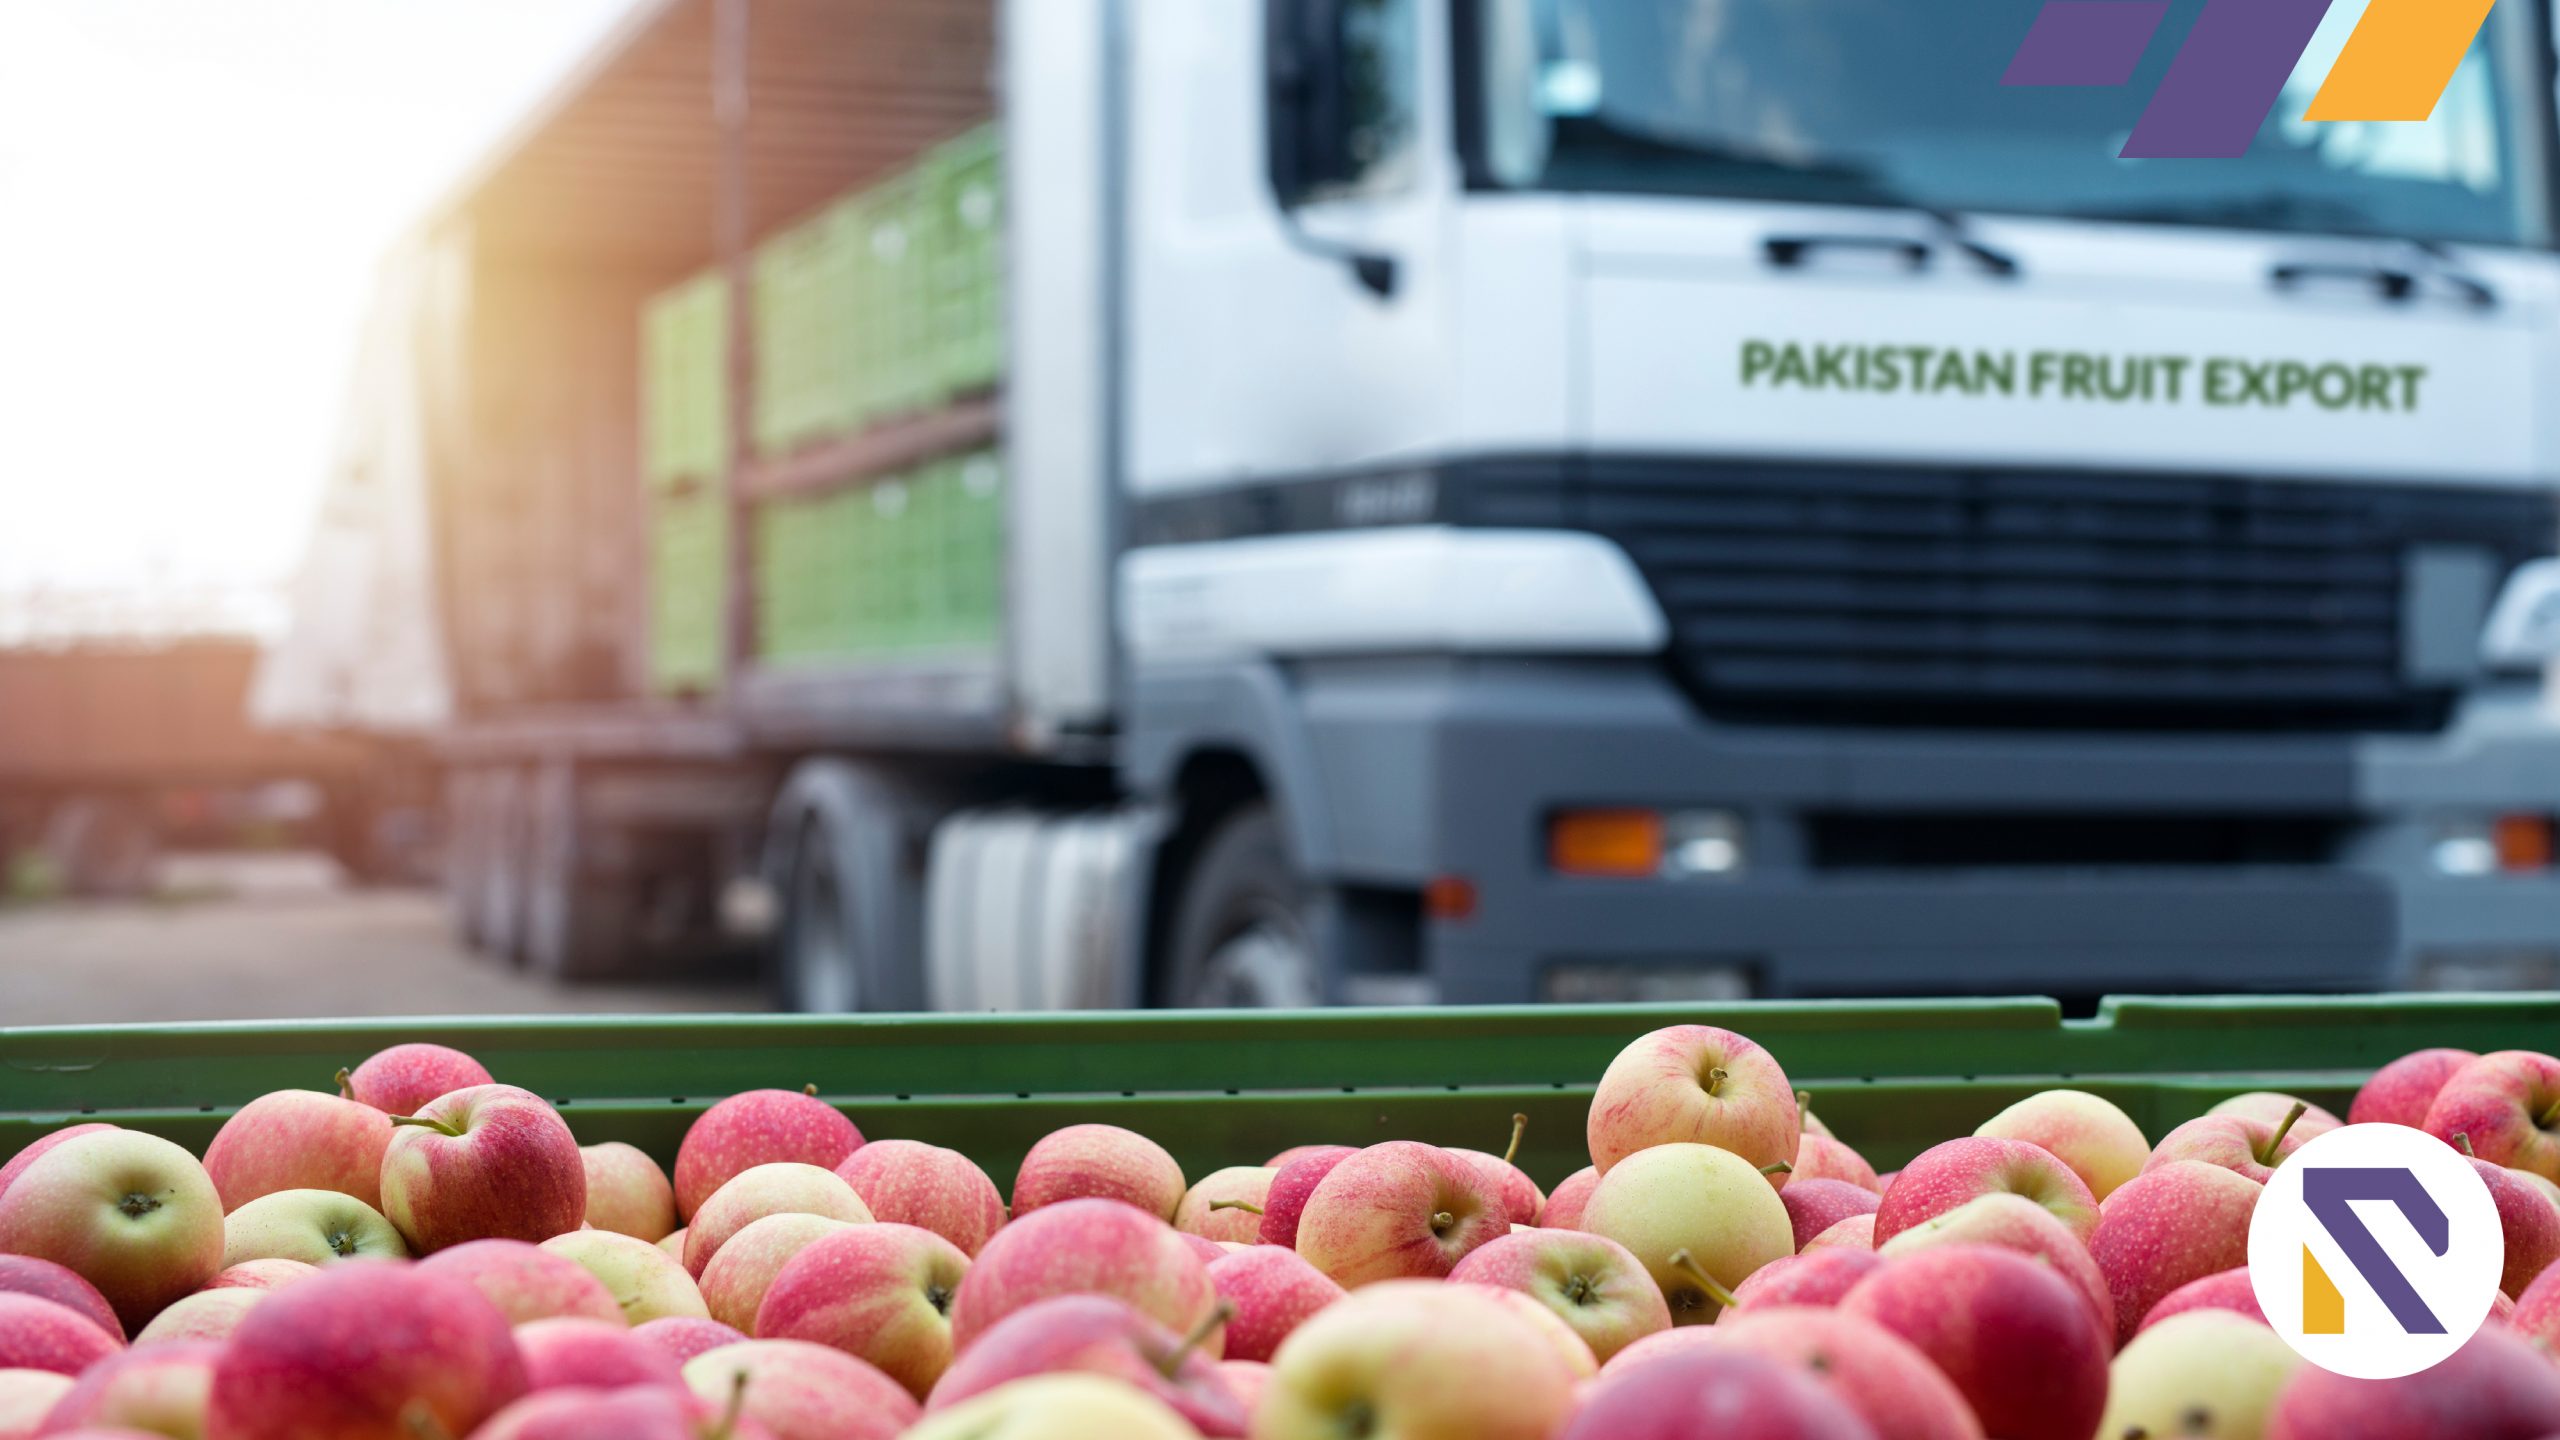 Pakistan Allows Fruit Export to Russia via Land Route -Realtorspk